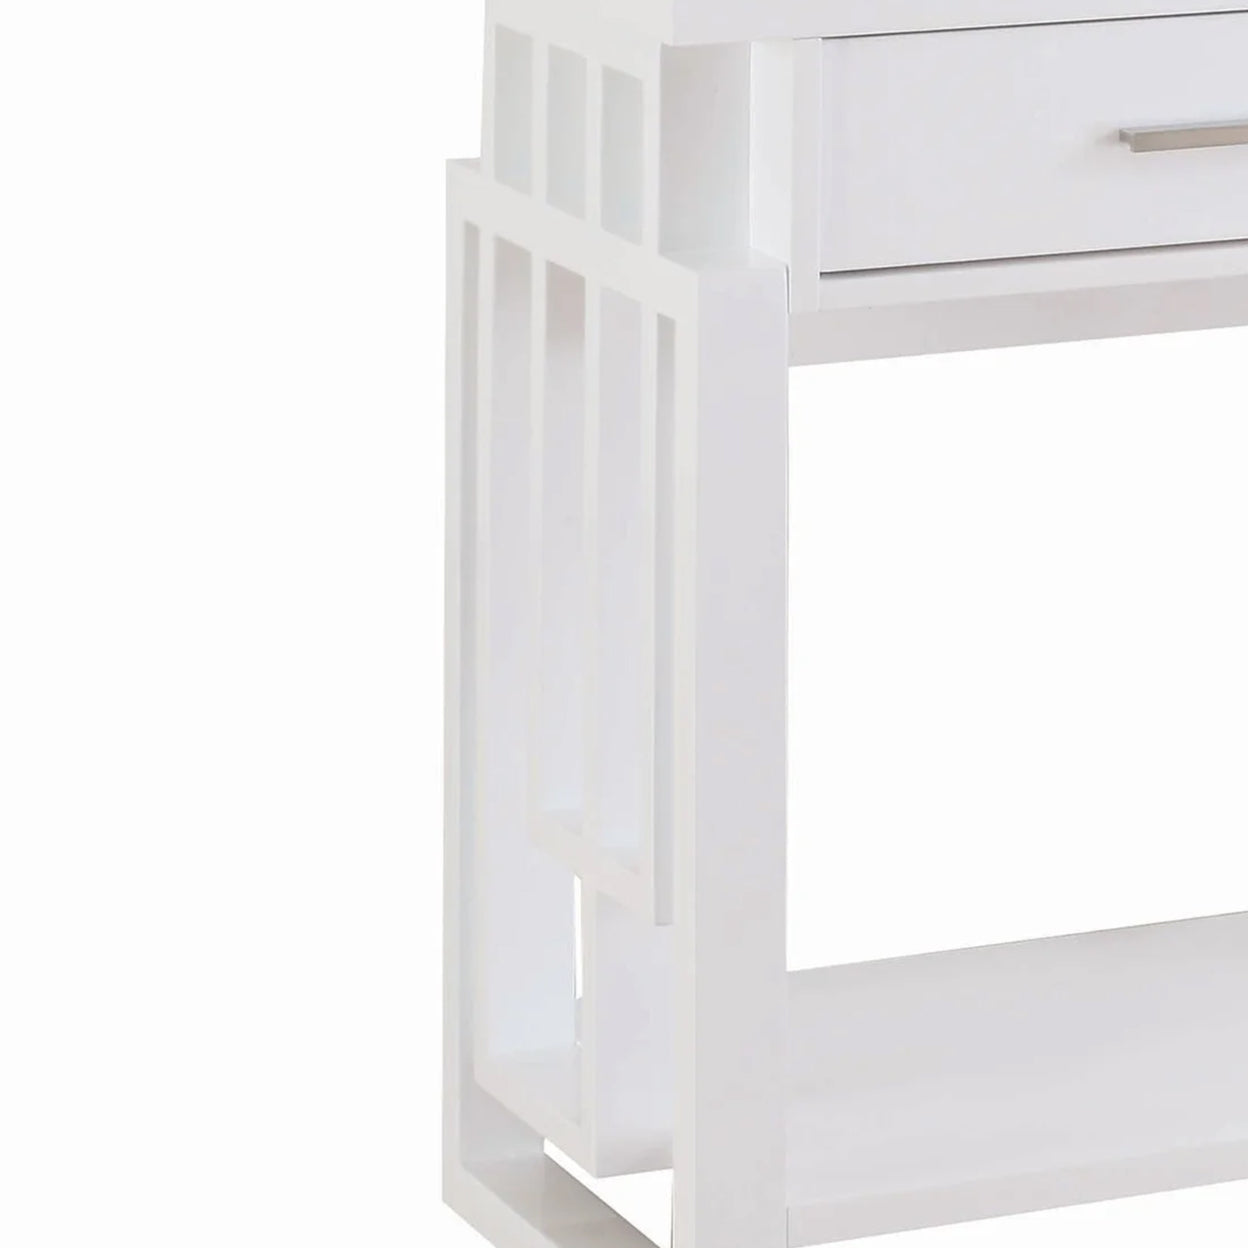 Rectangular 2-drawer Sofa Table High Glossy White